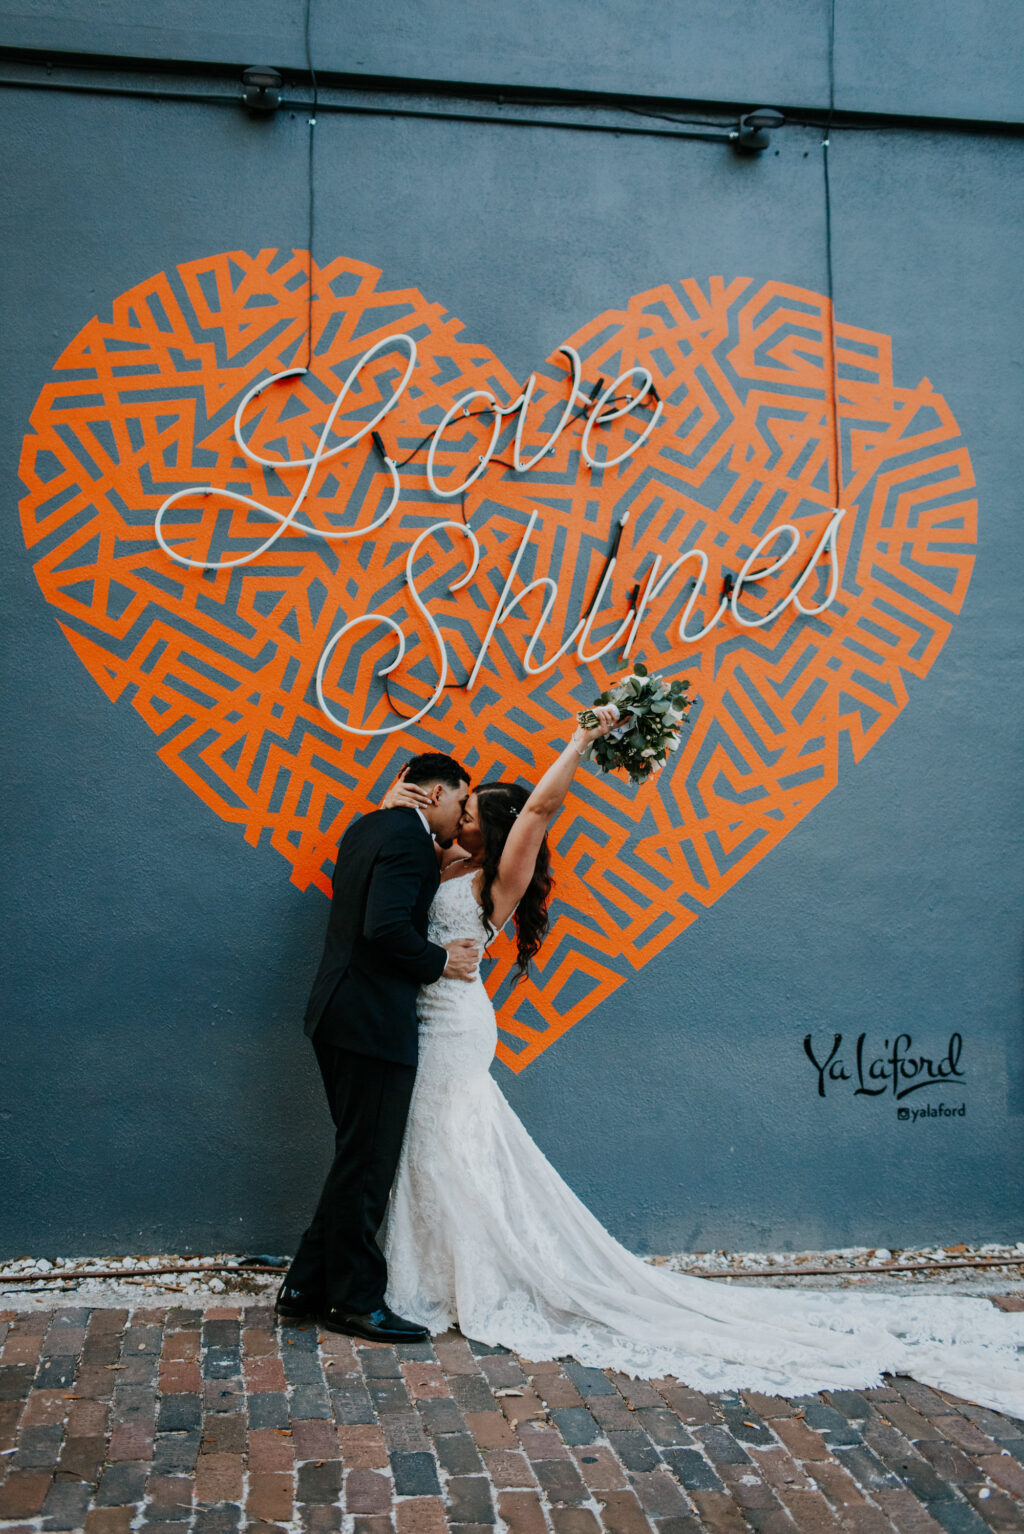 St Pete Love Shines Wall Art Mural Wedding Portrait Ideas | Tampa Bay Wedding Videographer Shannon Kelly Films